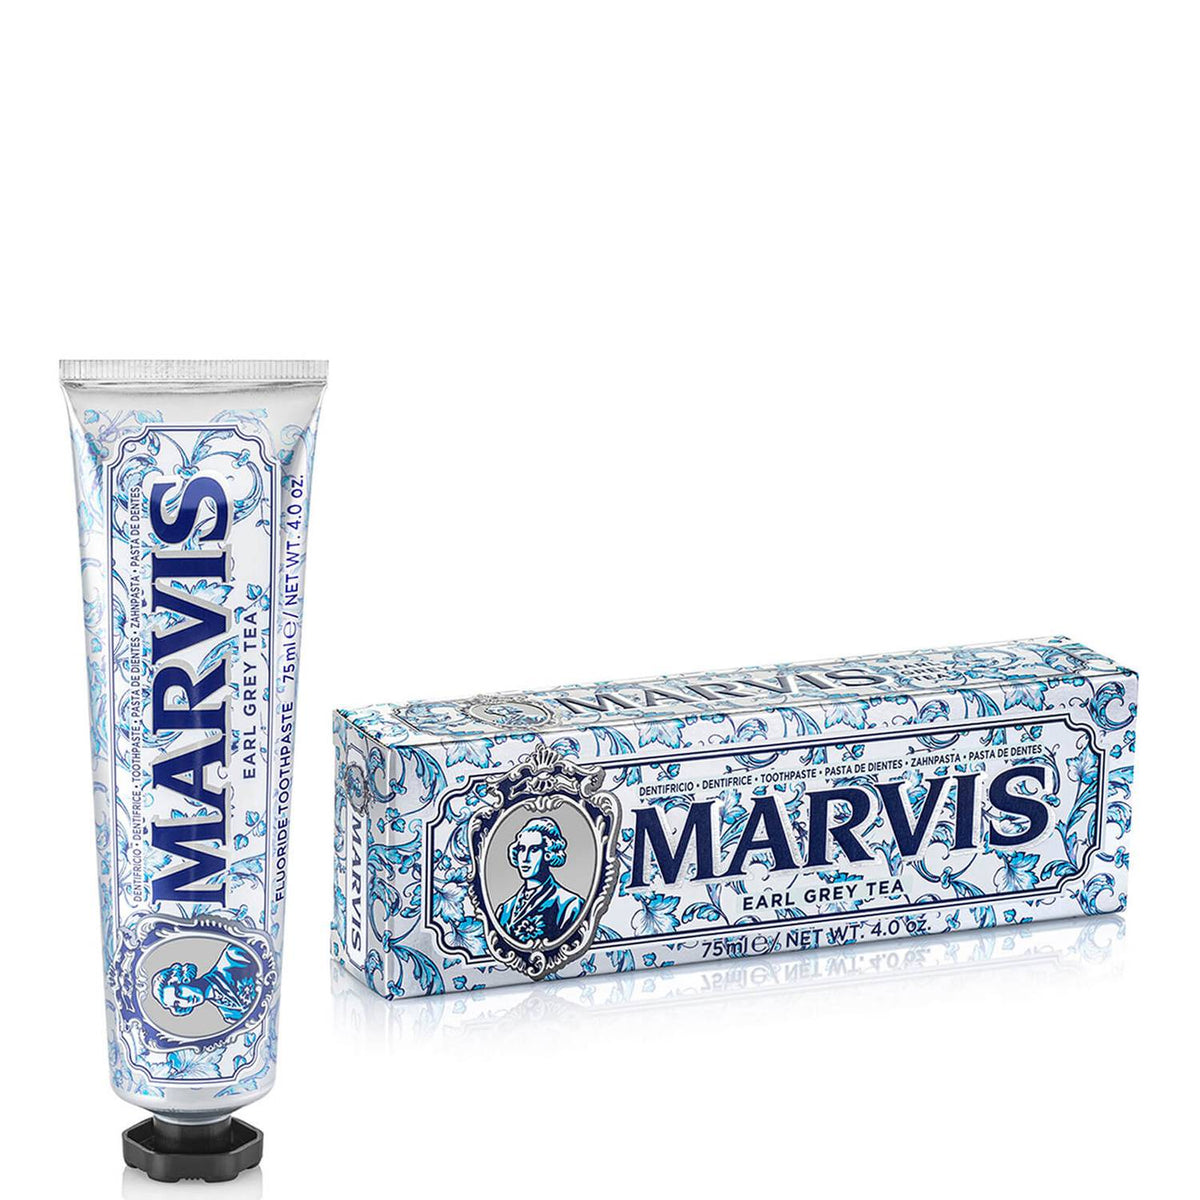 Marvis Toothpaste - Earl Grey Tea